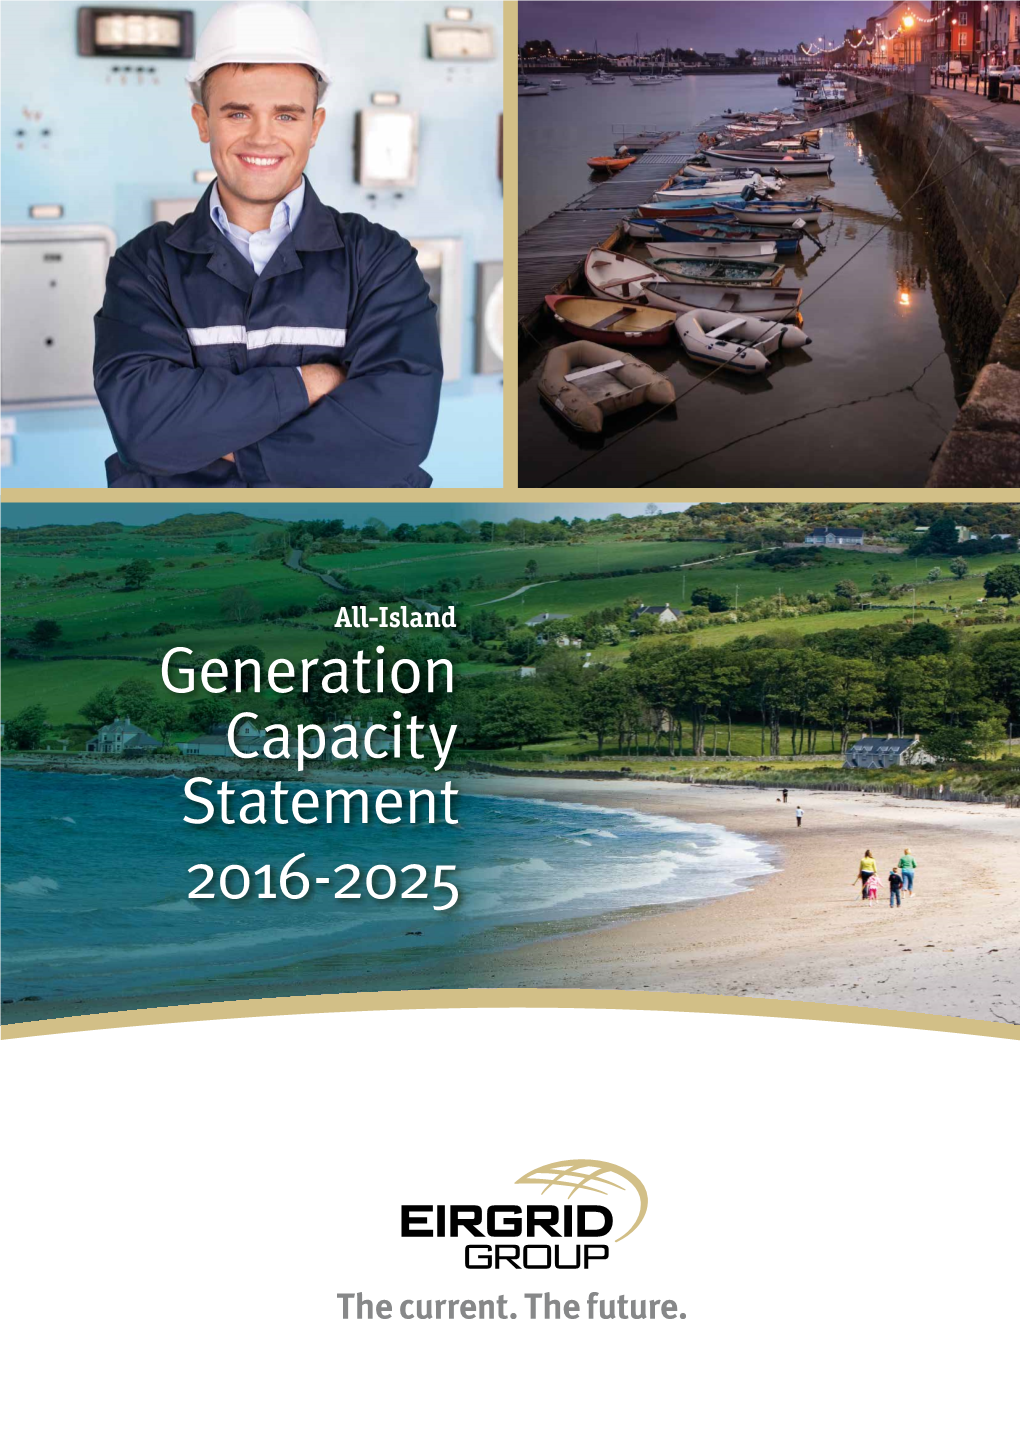 All-Island Generation Capacity Statement 2016-2025